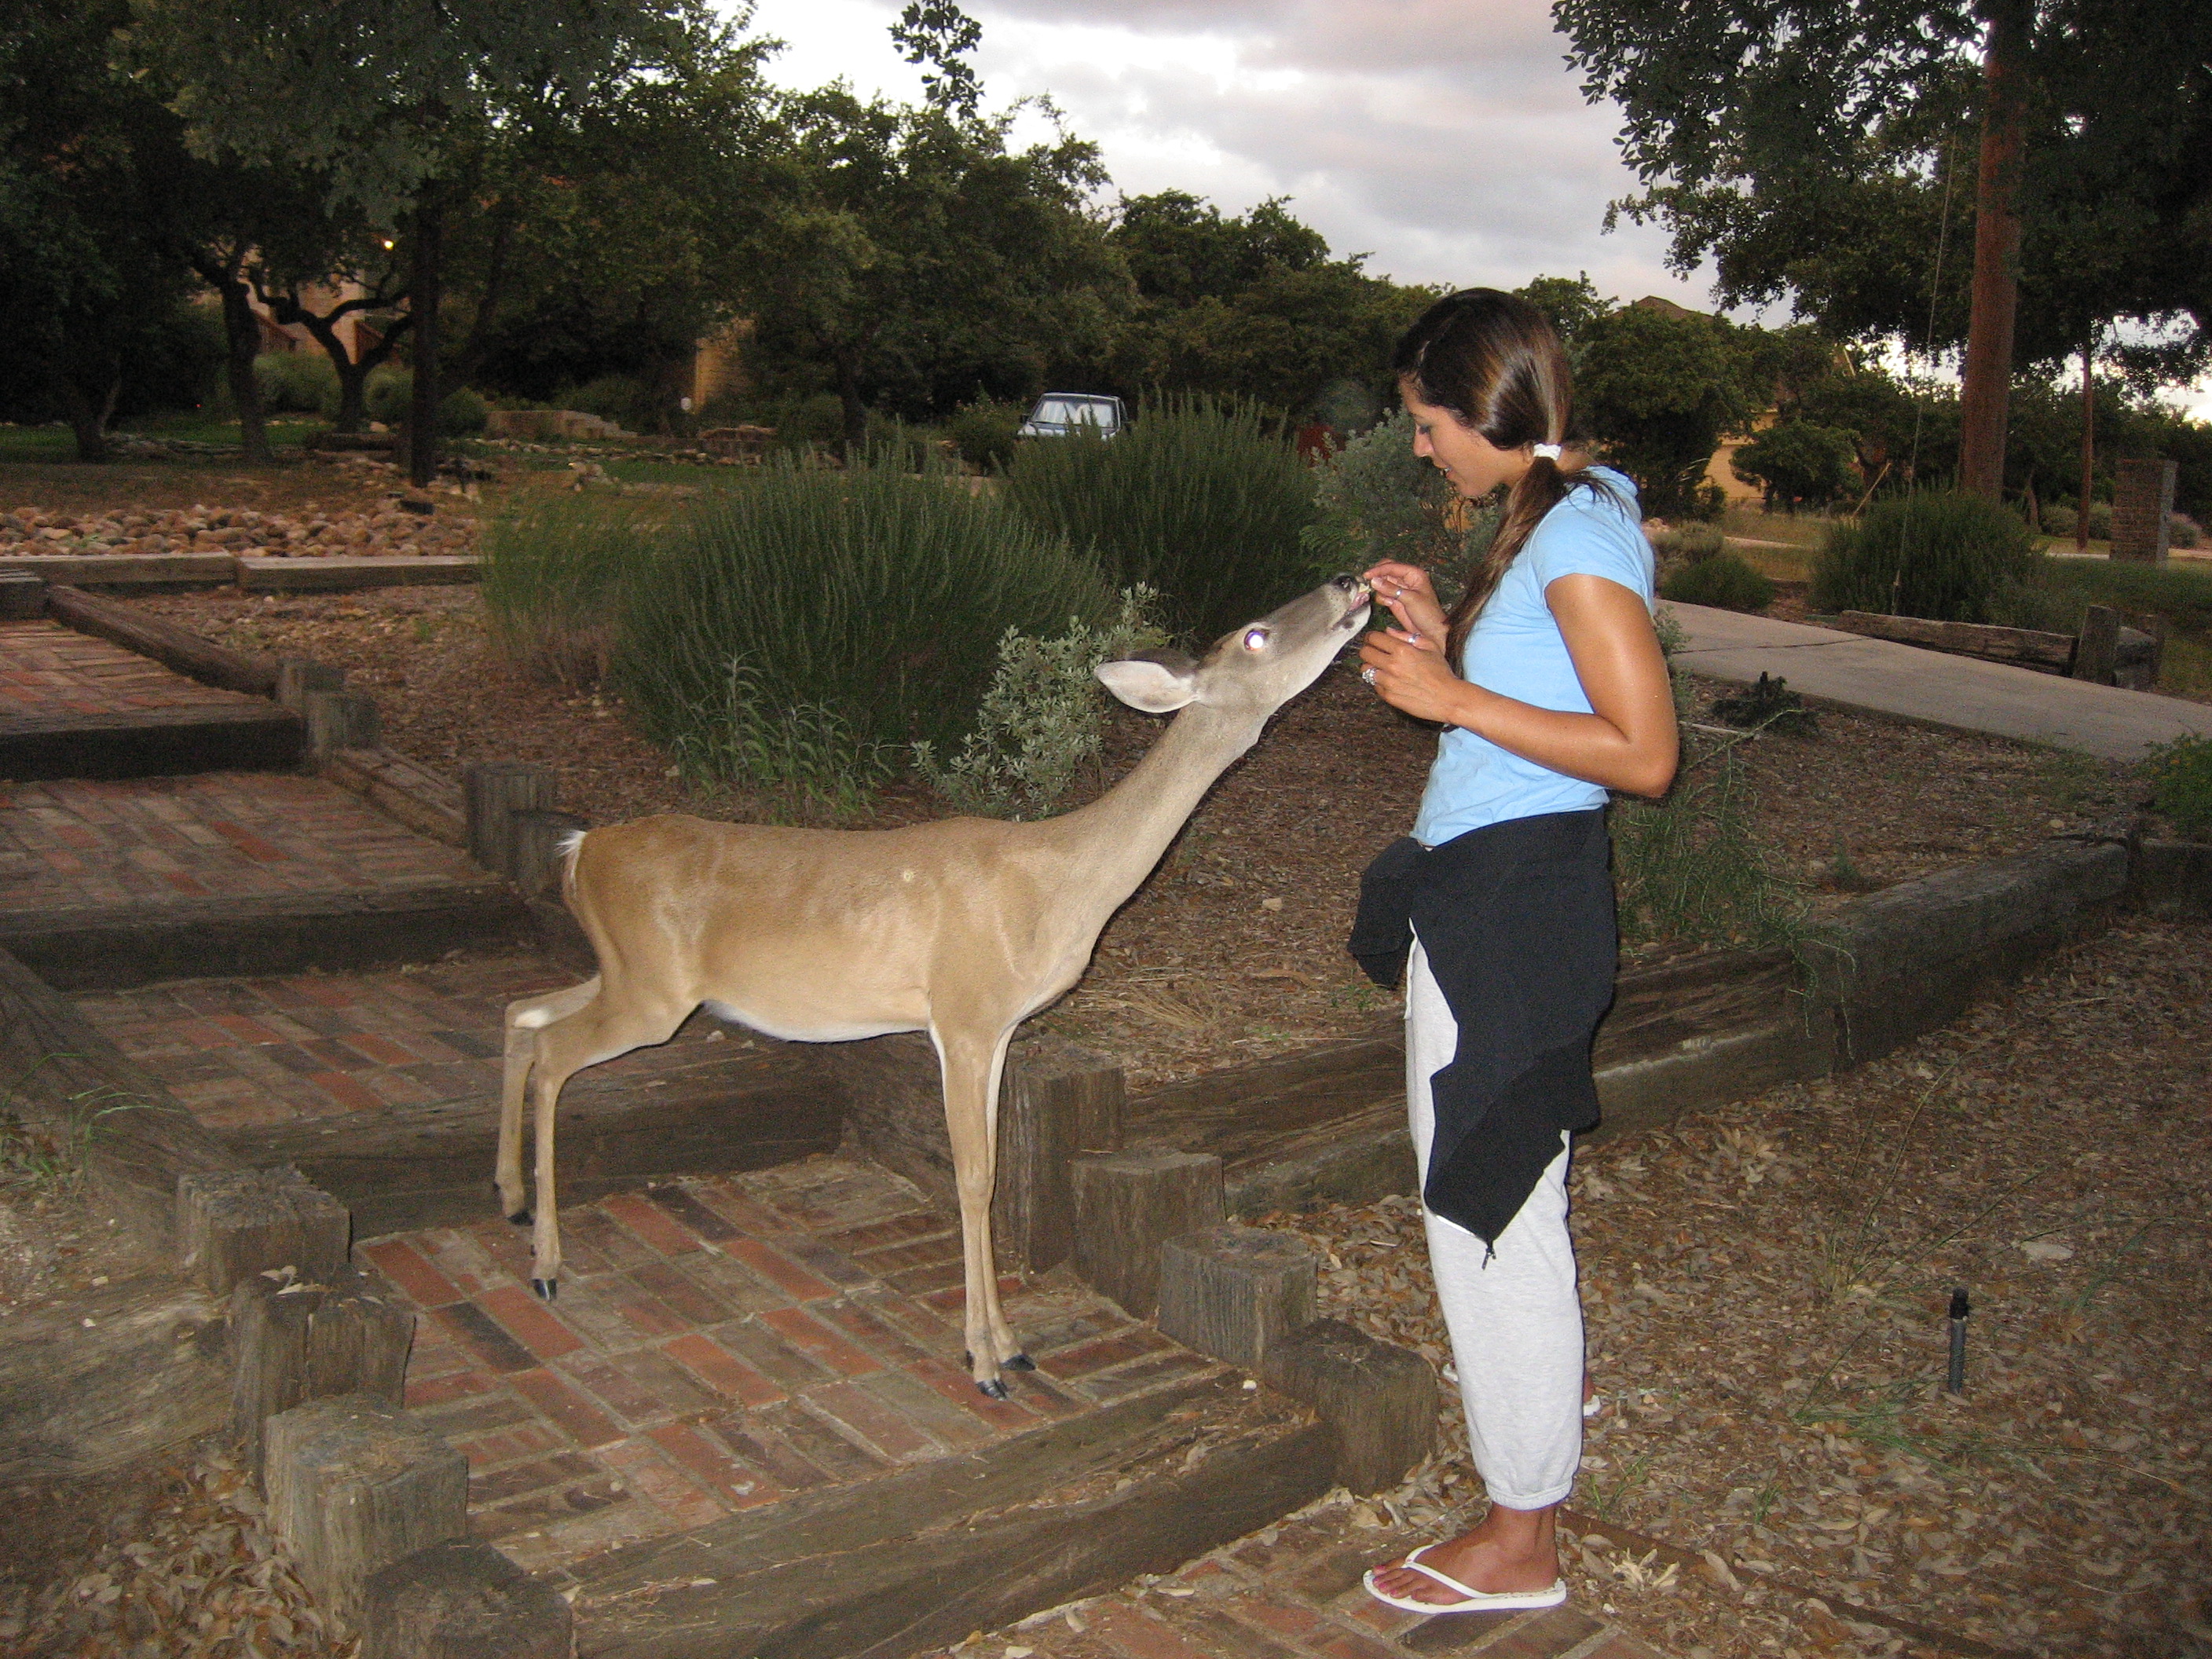 San Antonio Riverwalk & Hand-Feeding Deer | Victoria's Ventures Blog